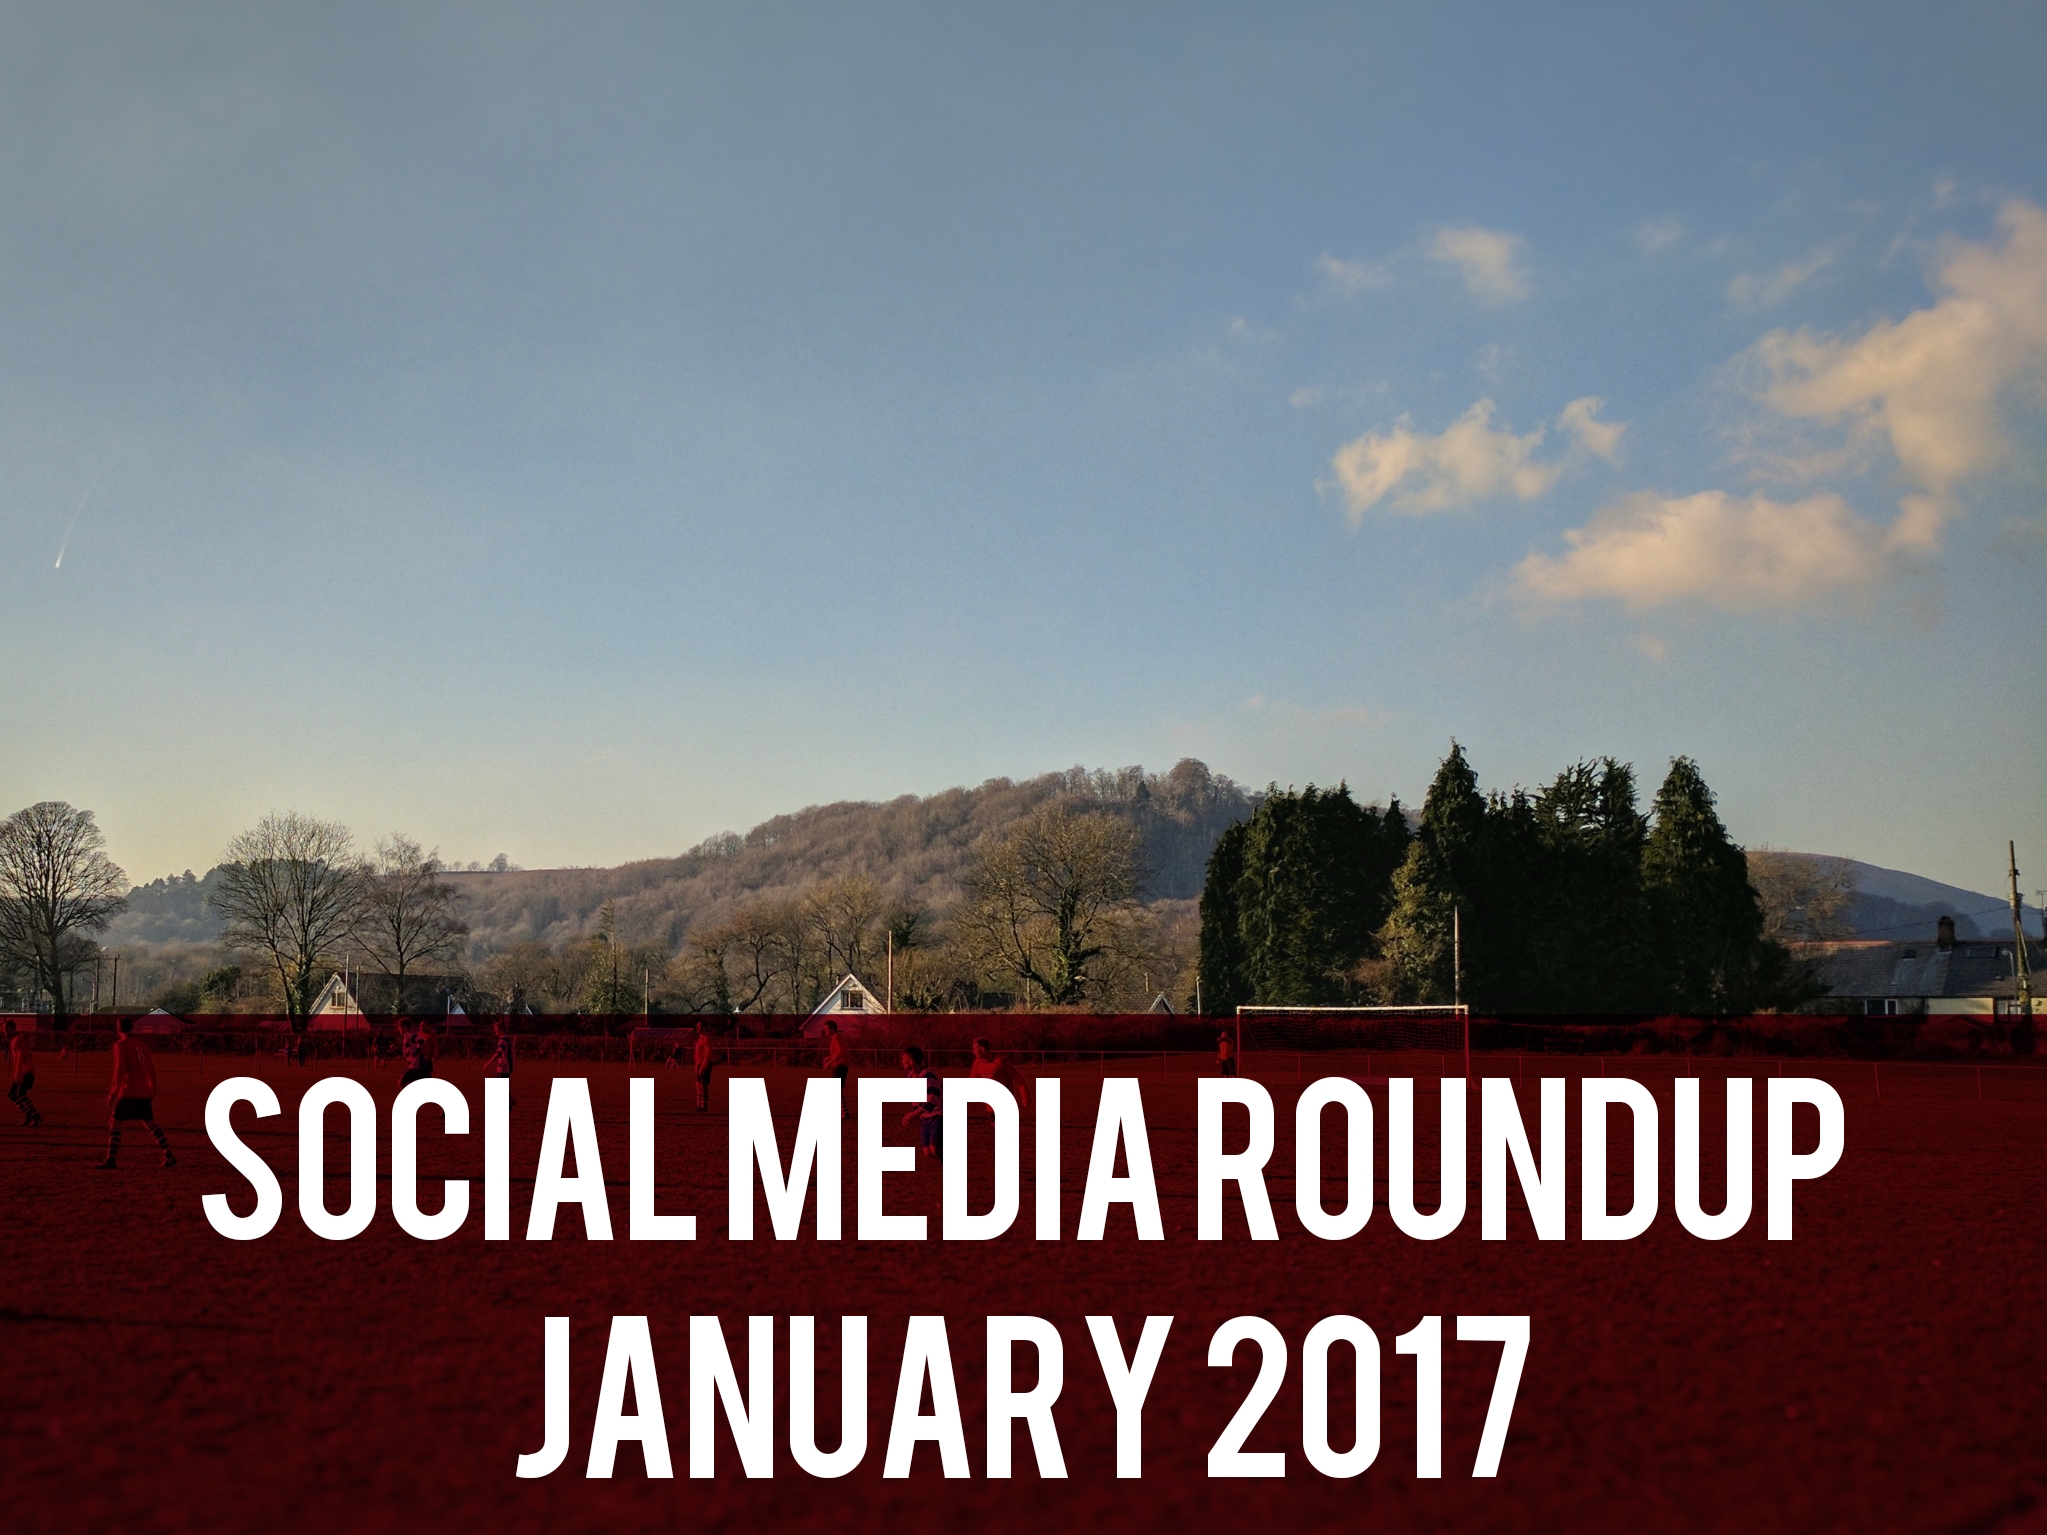 Social media roundup January 2017 header